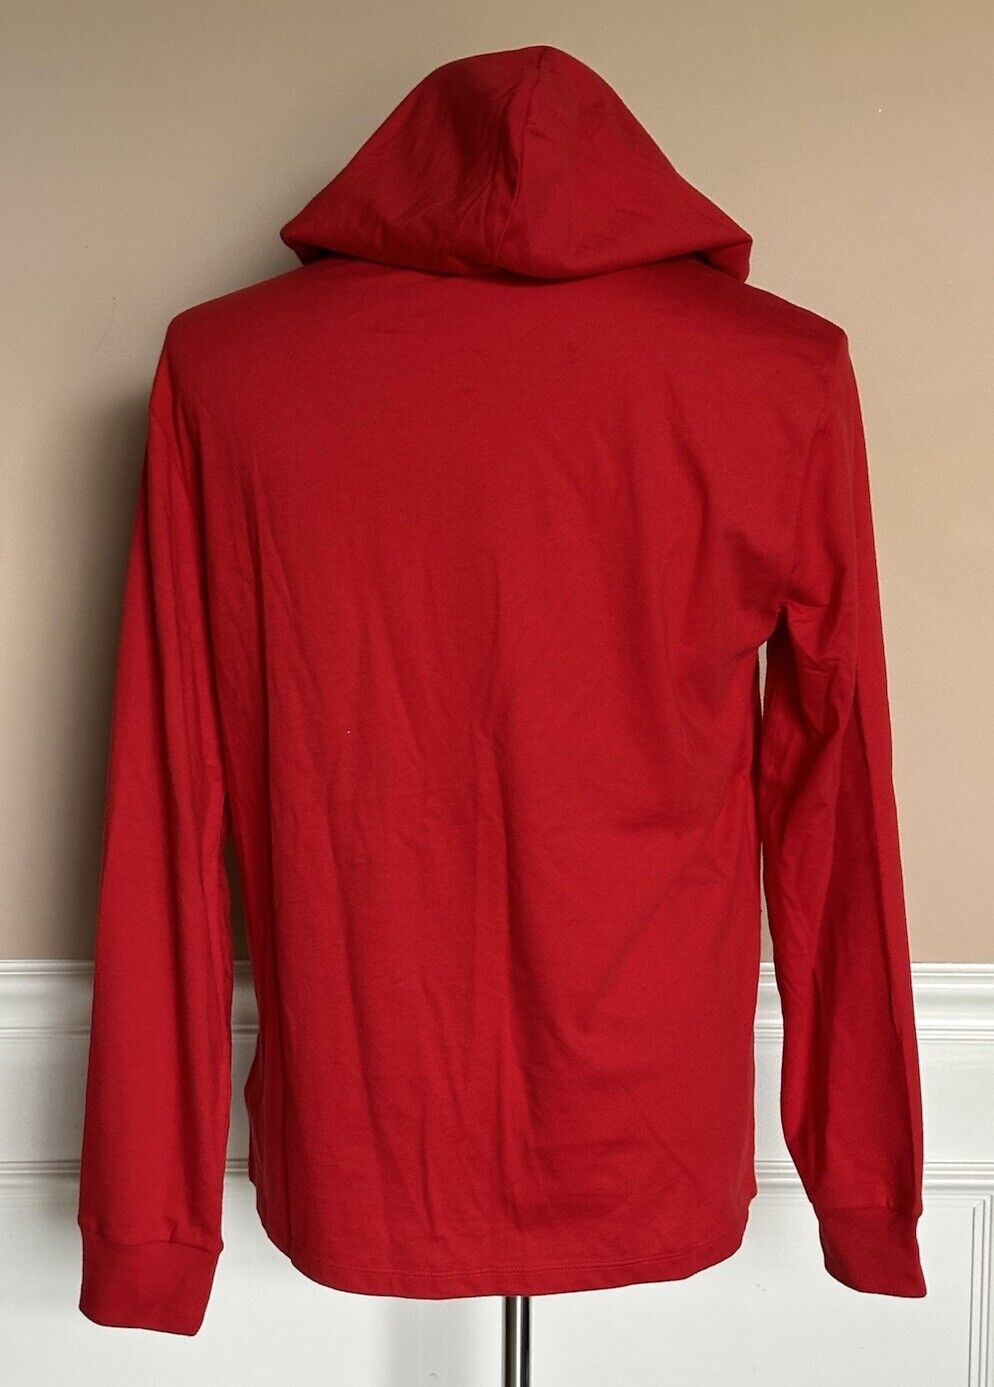 NWT $85 Polo Ralph Lauren Bear Long Sleeve T-shirt with Hoodie Red Medium